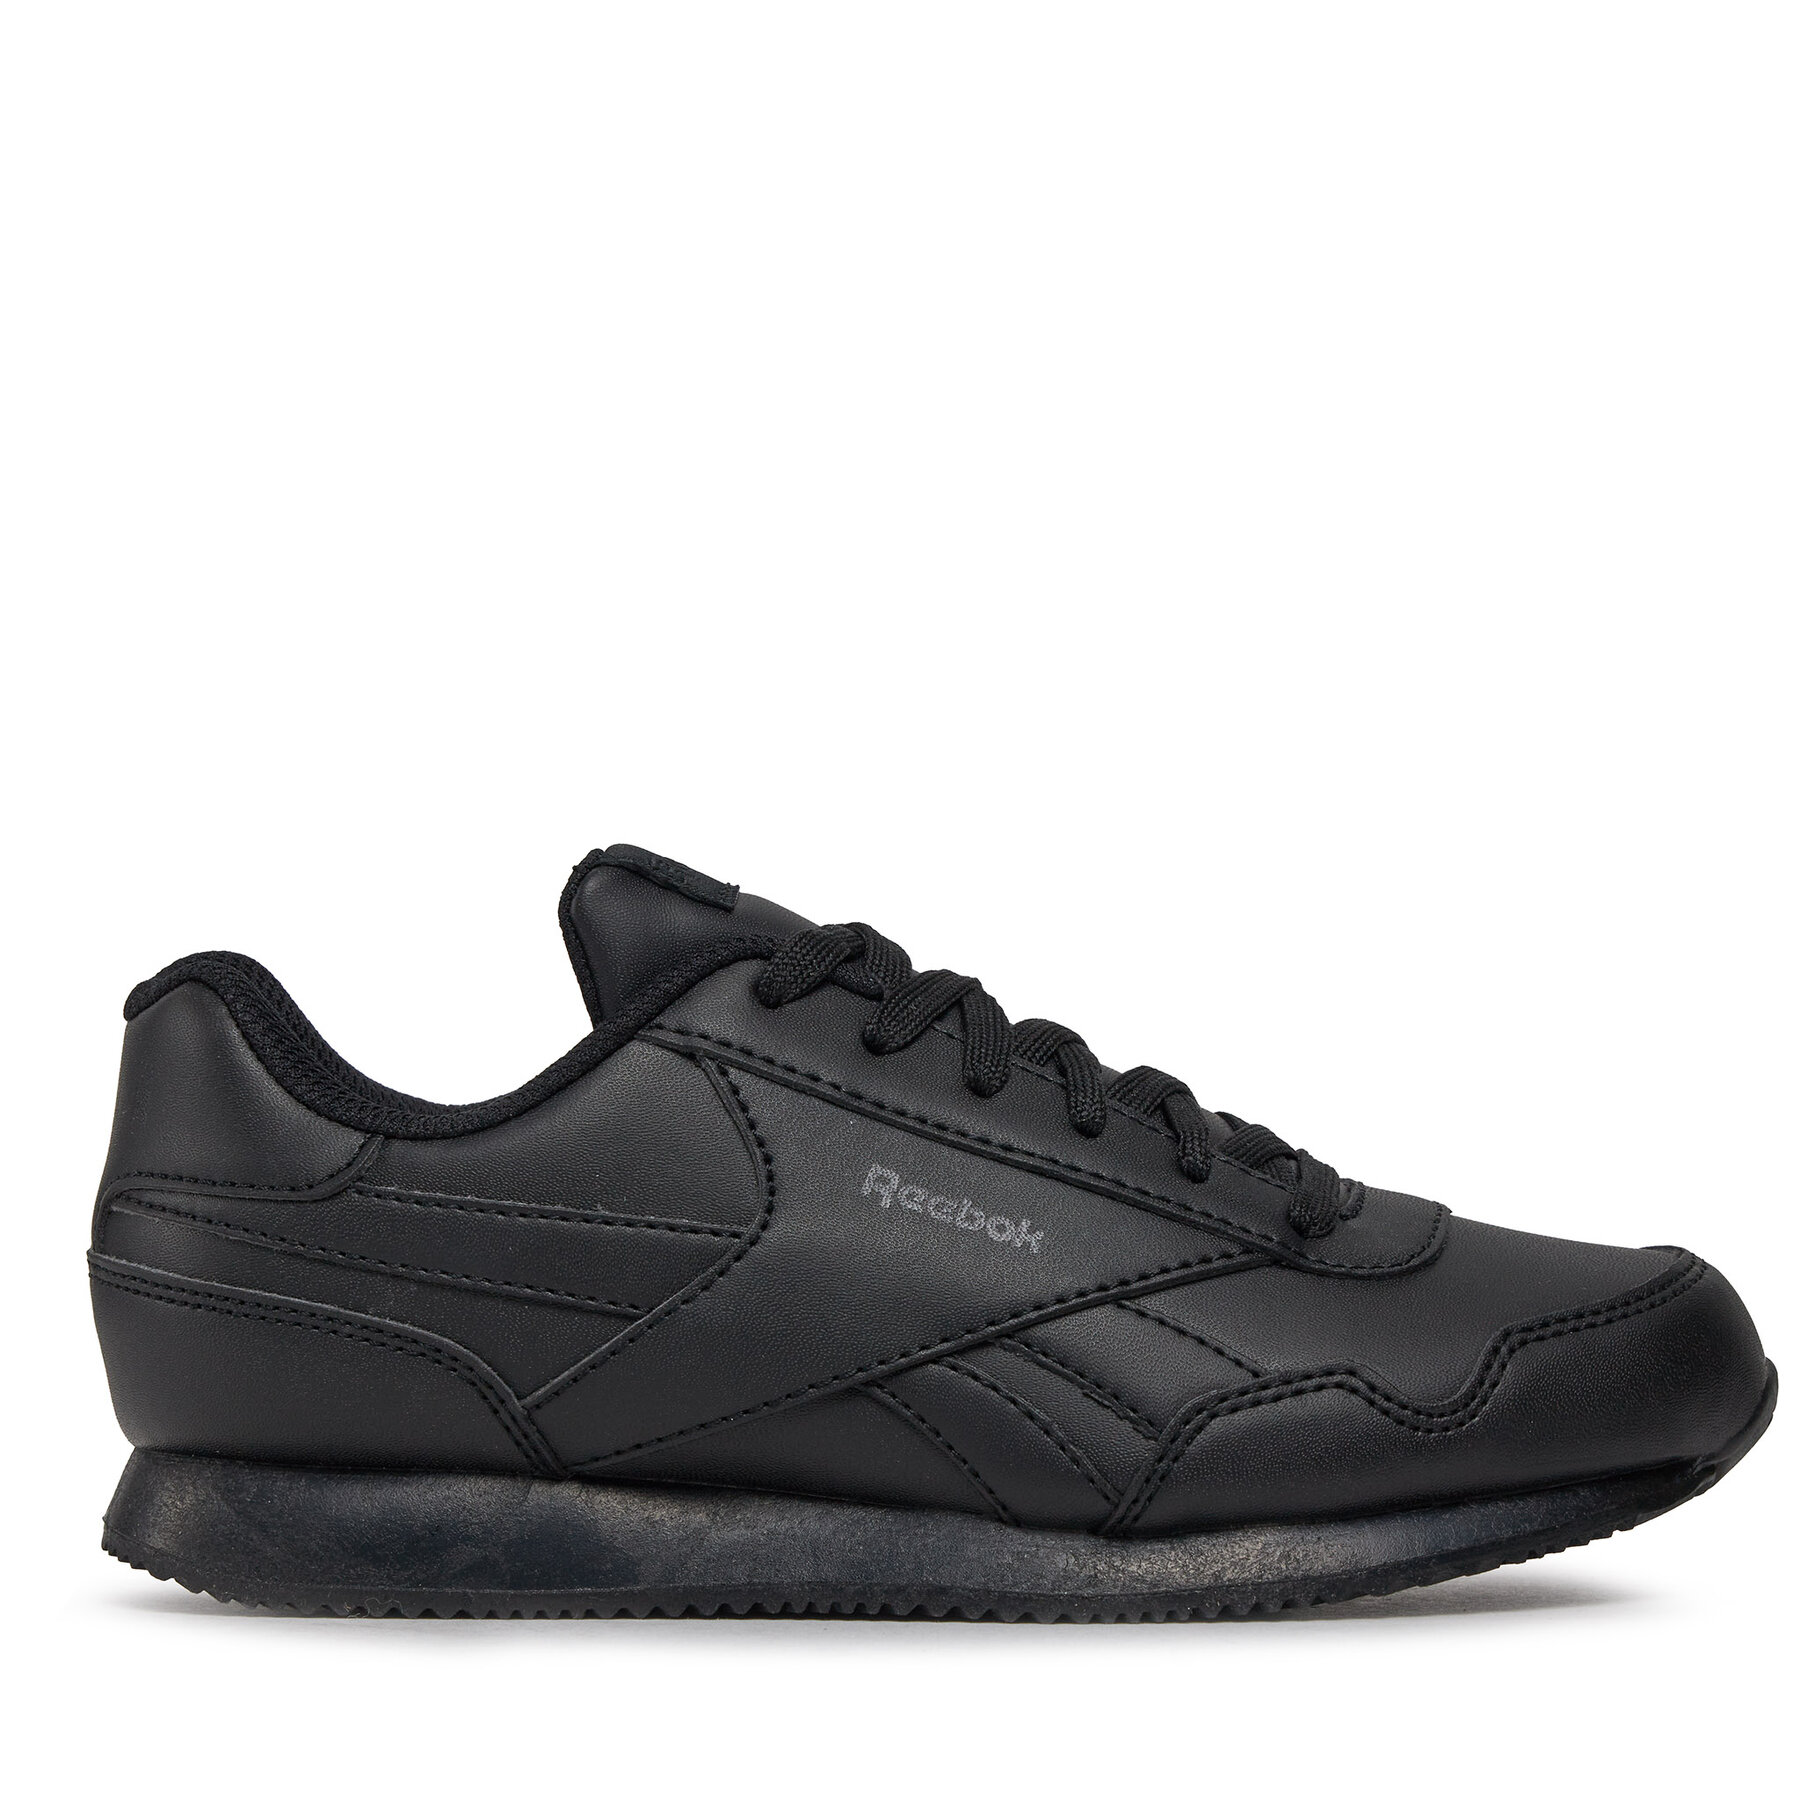 Schuhe Reebok Royal Cljog 3.0 FV1295 Black/Black/Black von Reebok